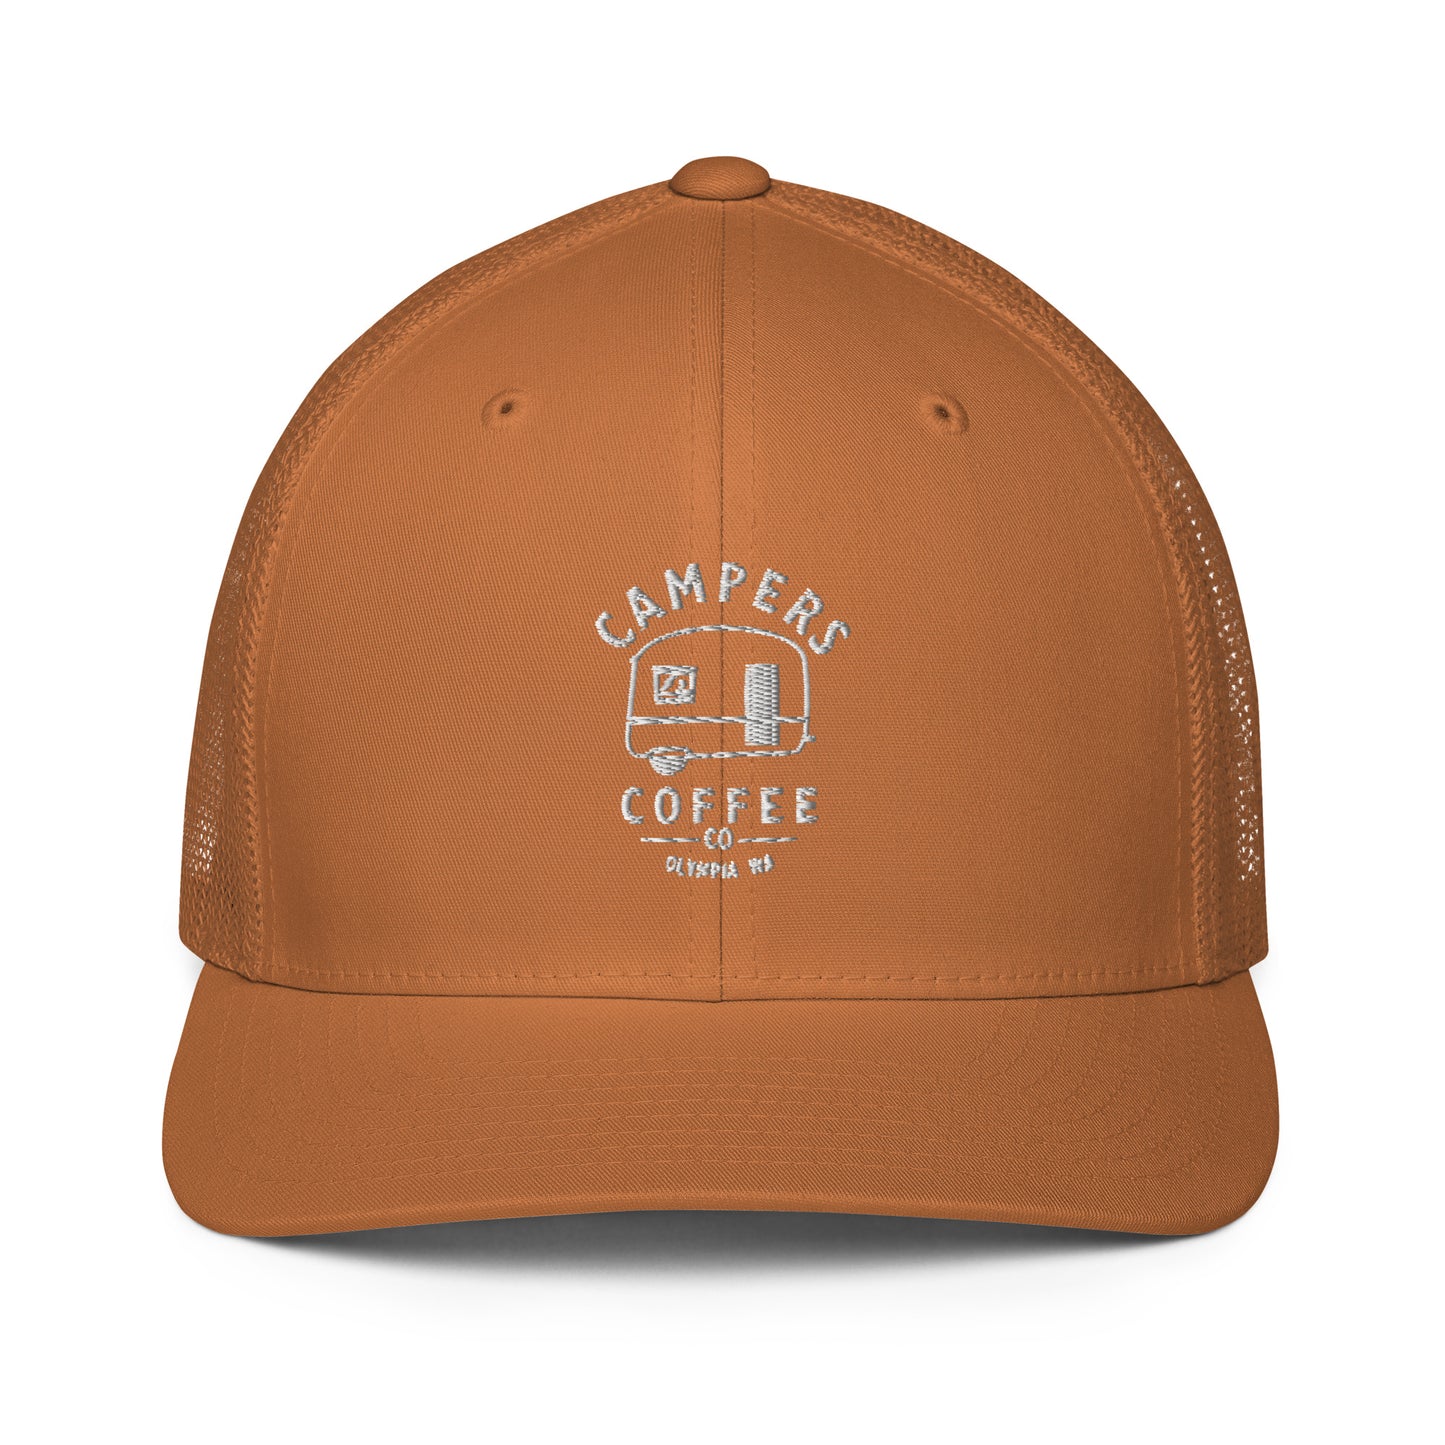 Campers Coffee Mesh back trucker cap